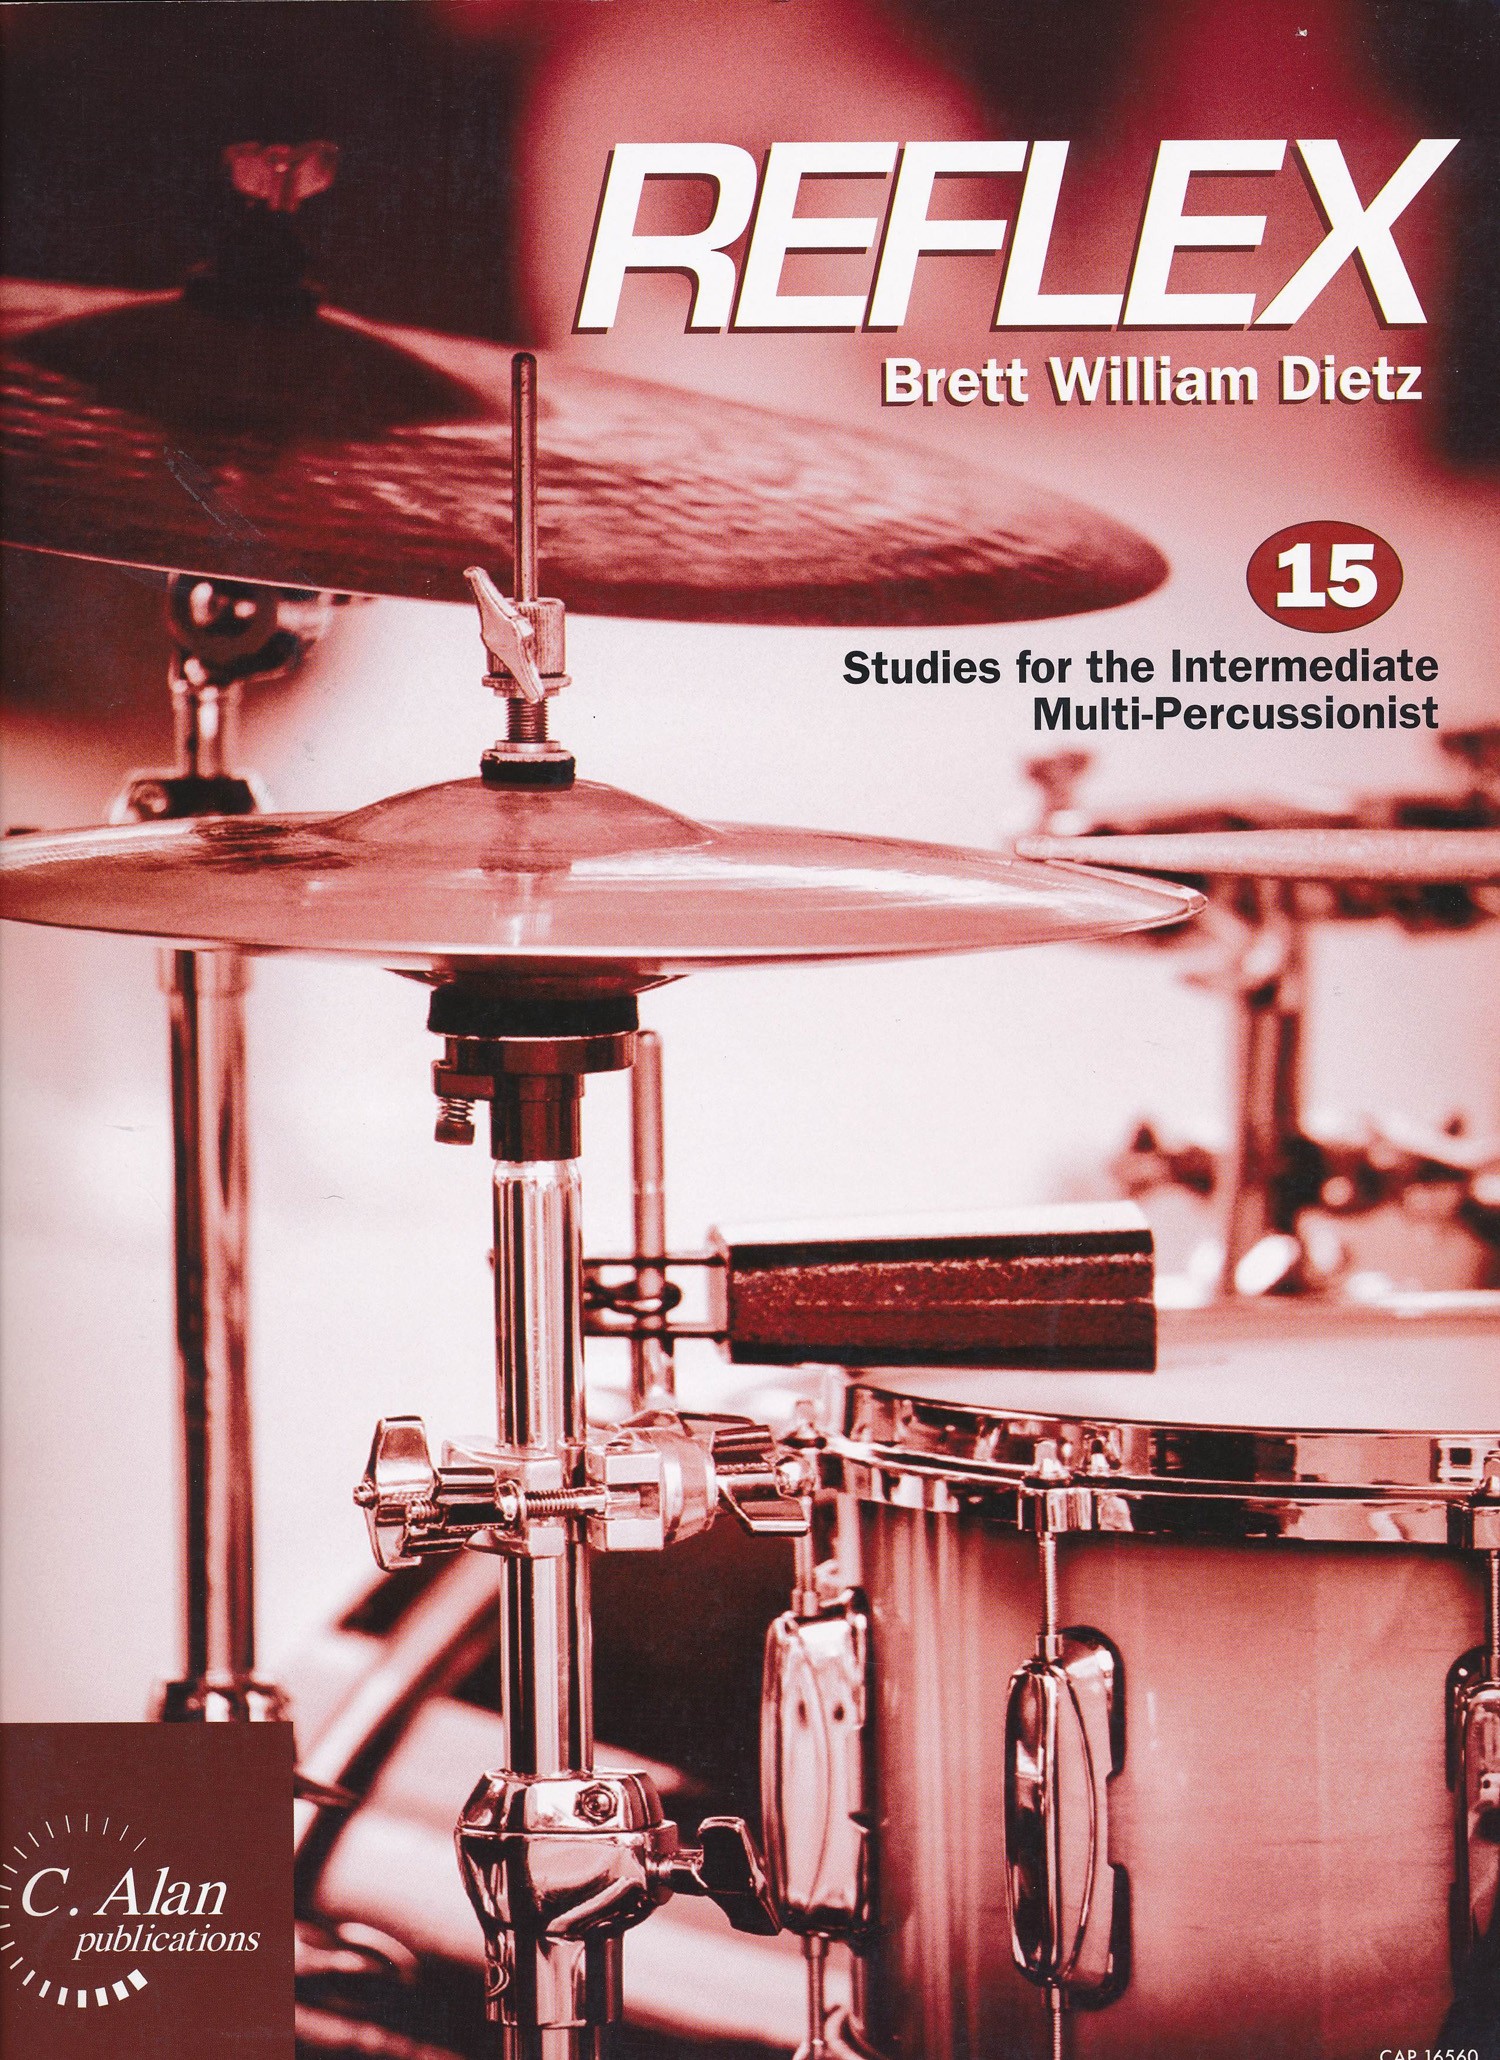 Reflex - 15 Studies for the Intermediate Multi-Percussionist by Brett Dietz